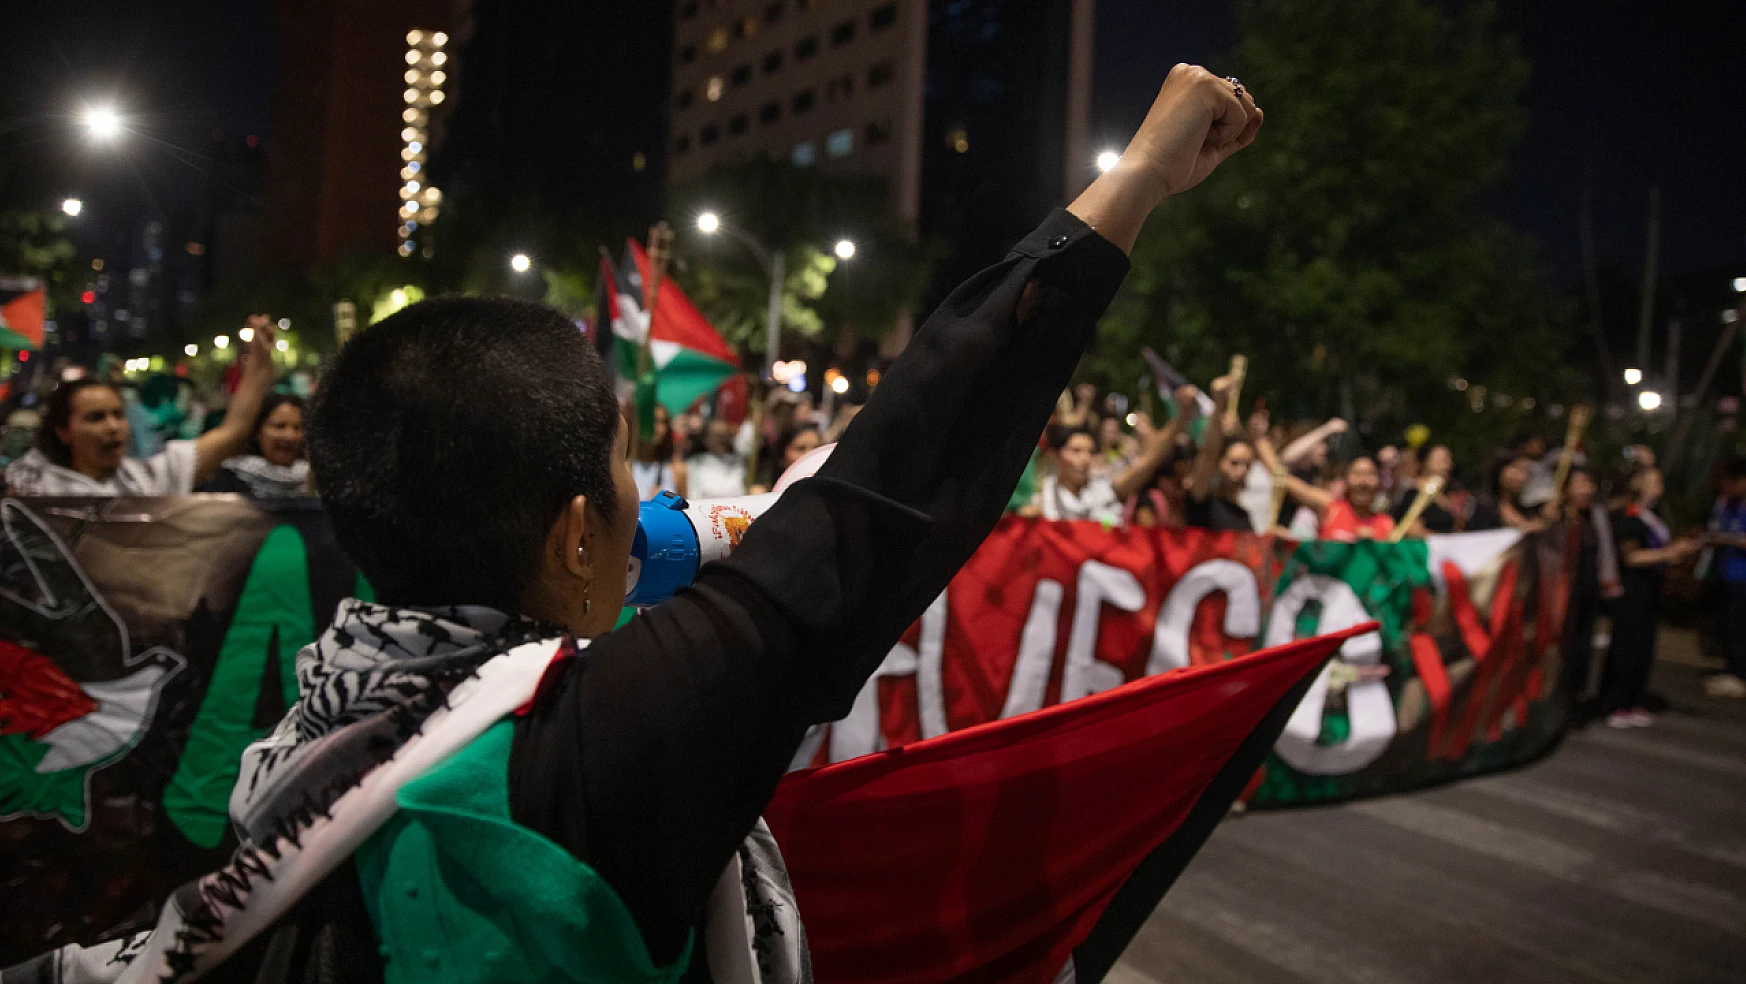 Mexico City'de Filistin'e destek gösterisi düzenlendi